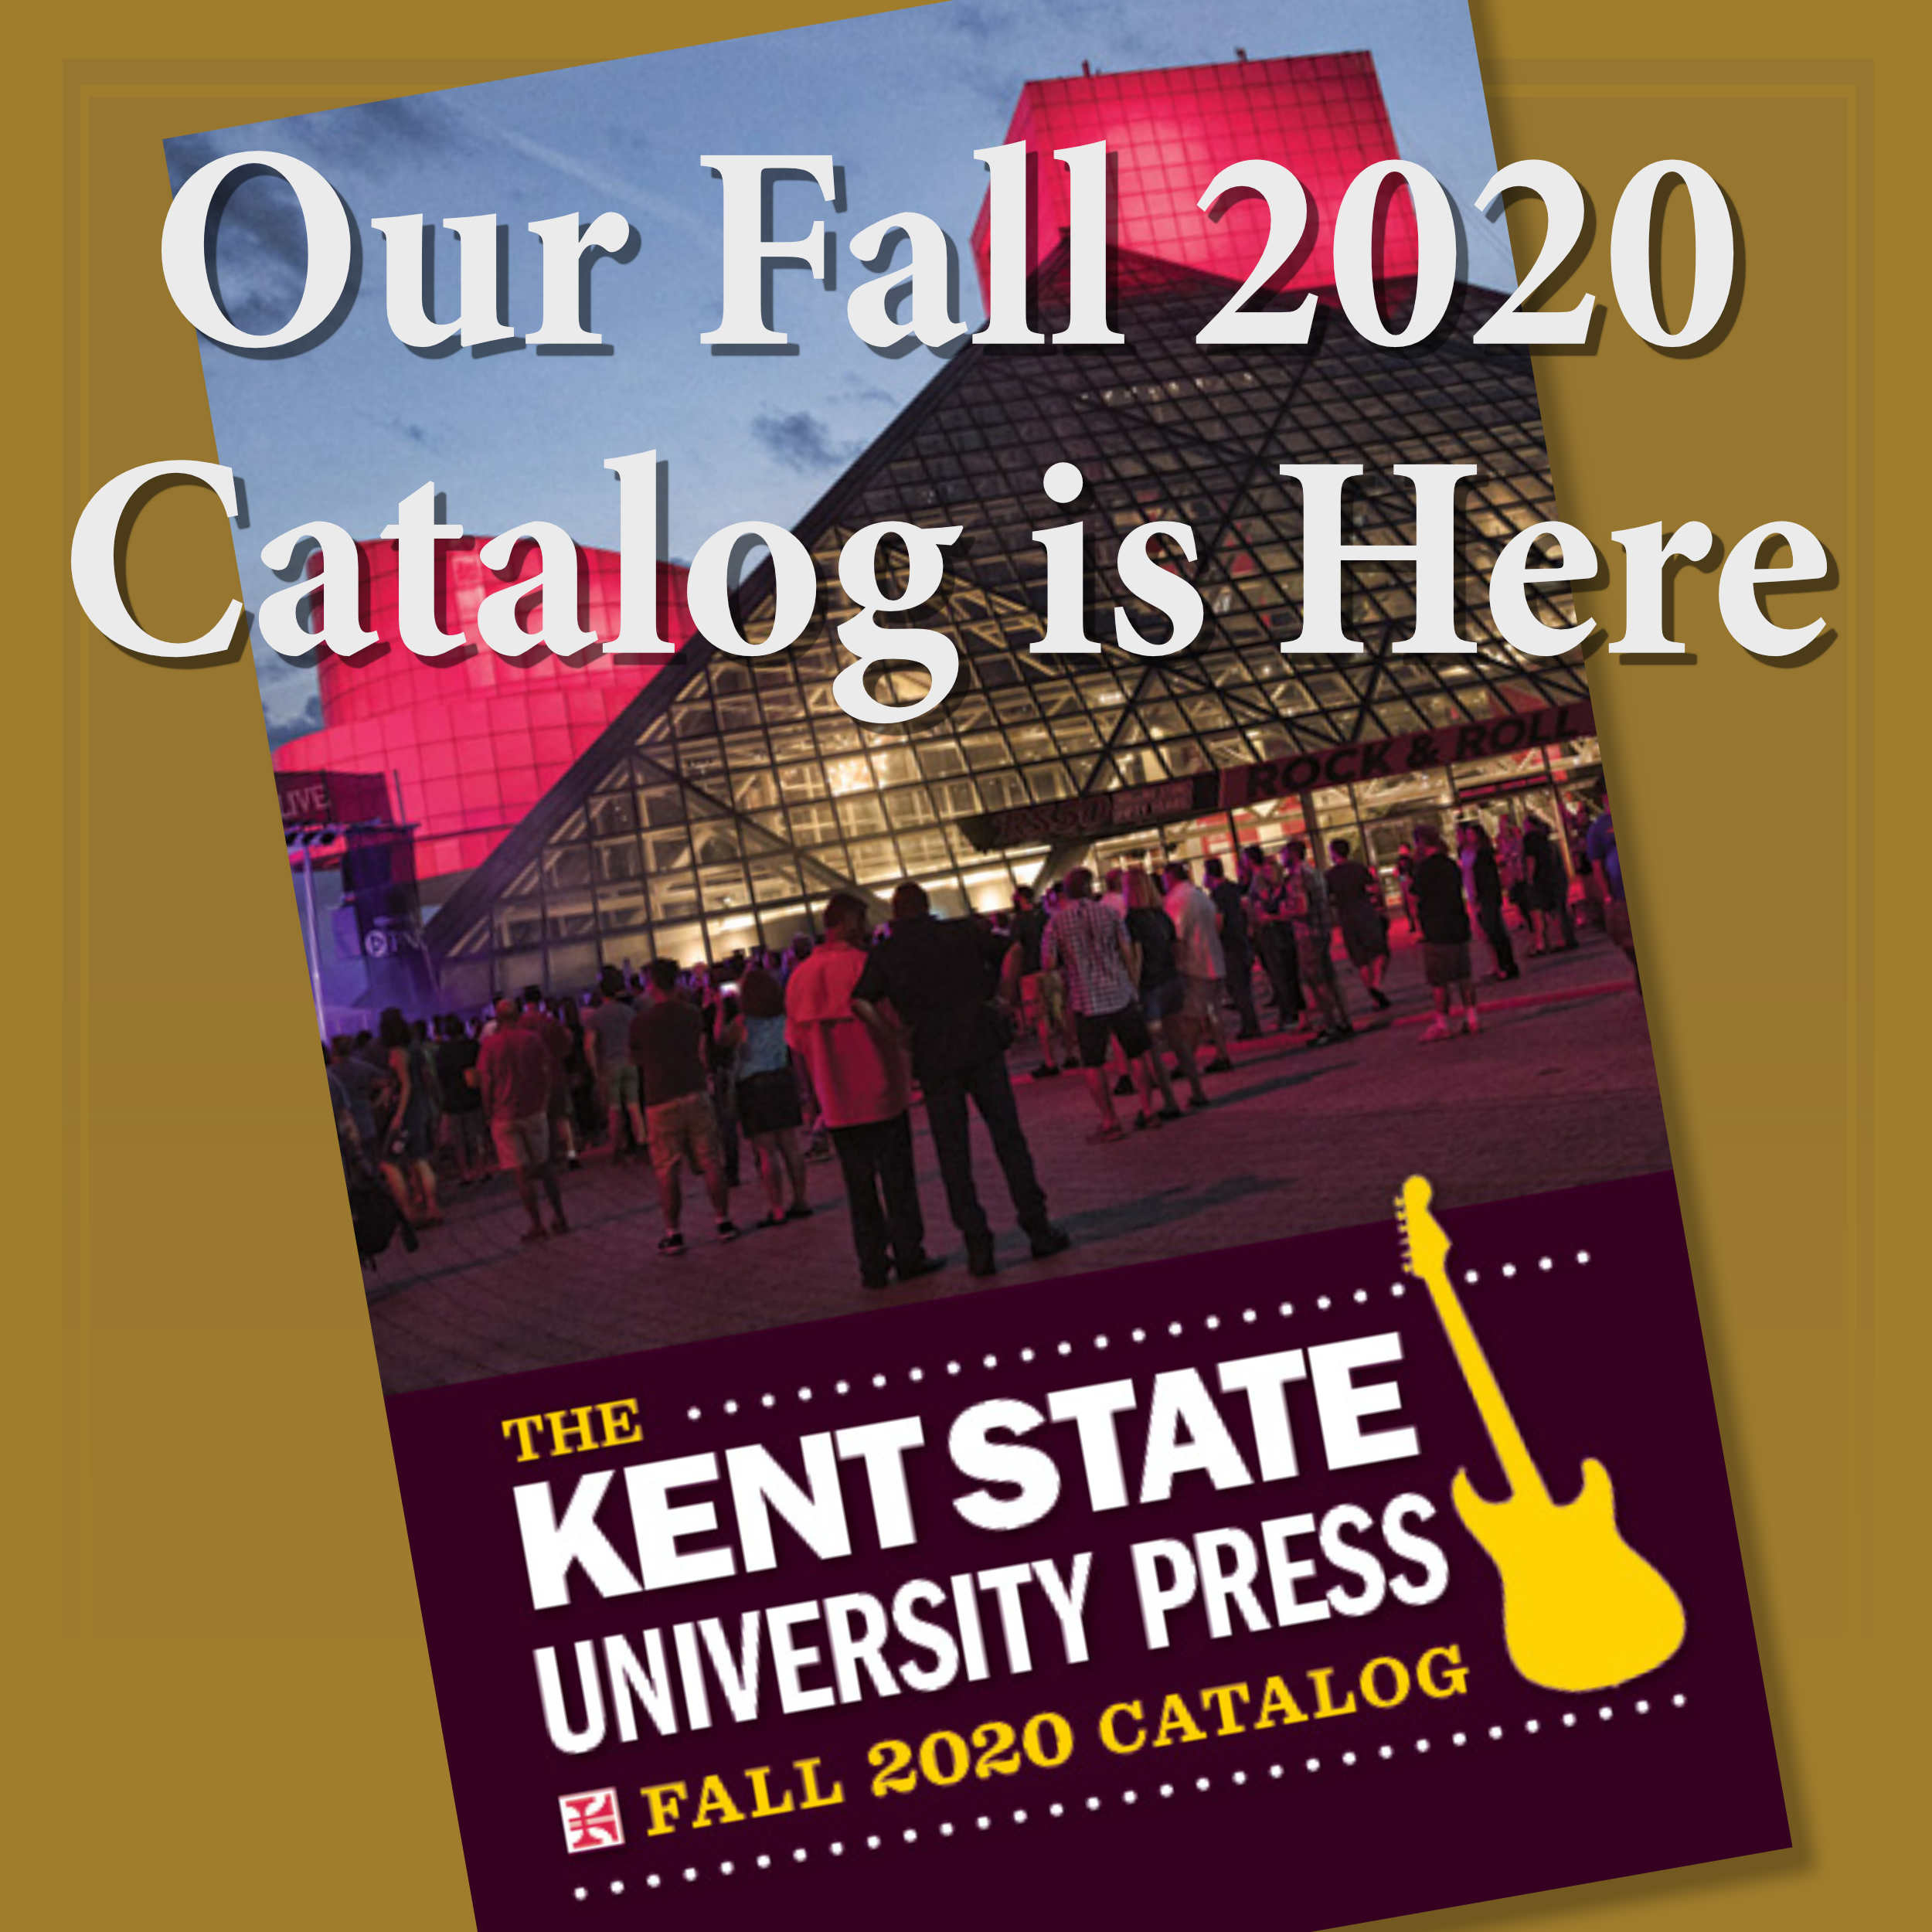 The Kent State University Press